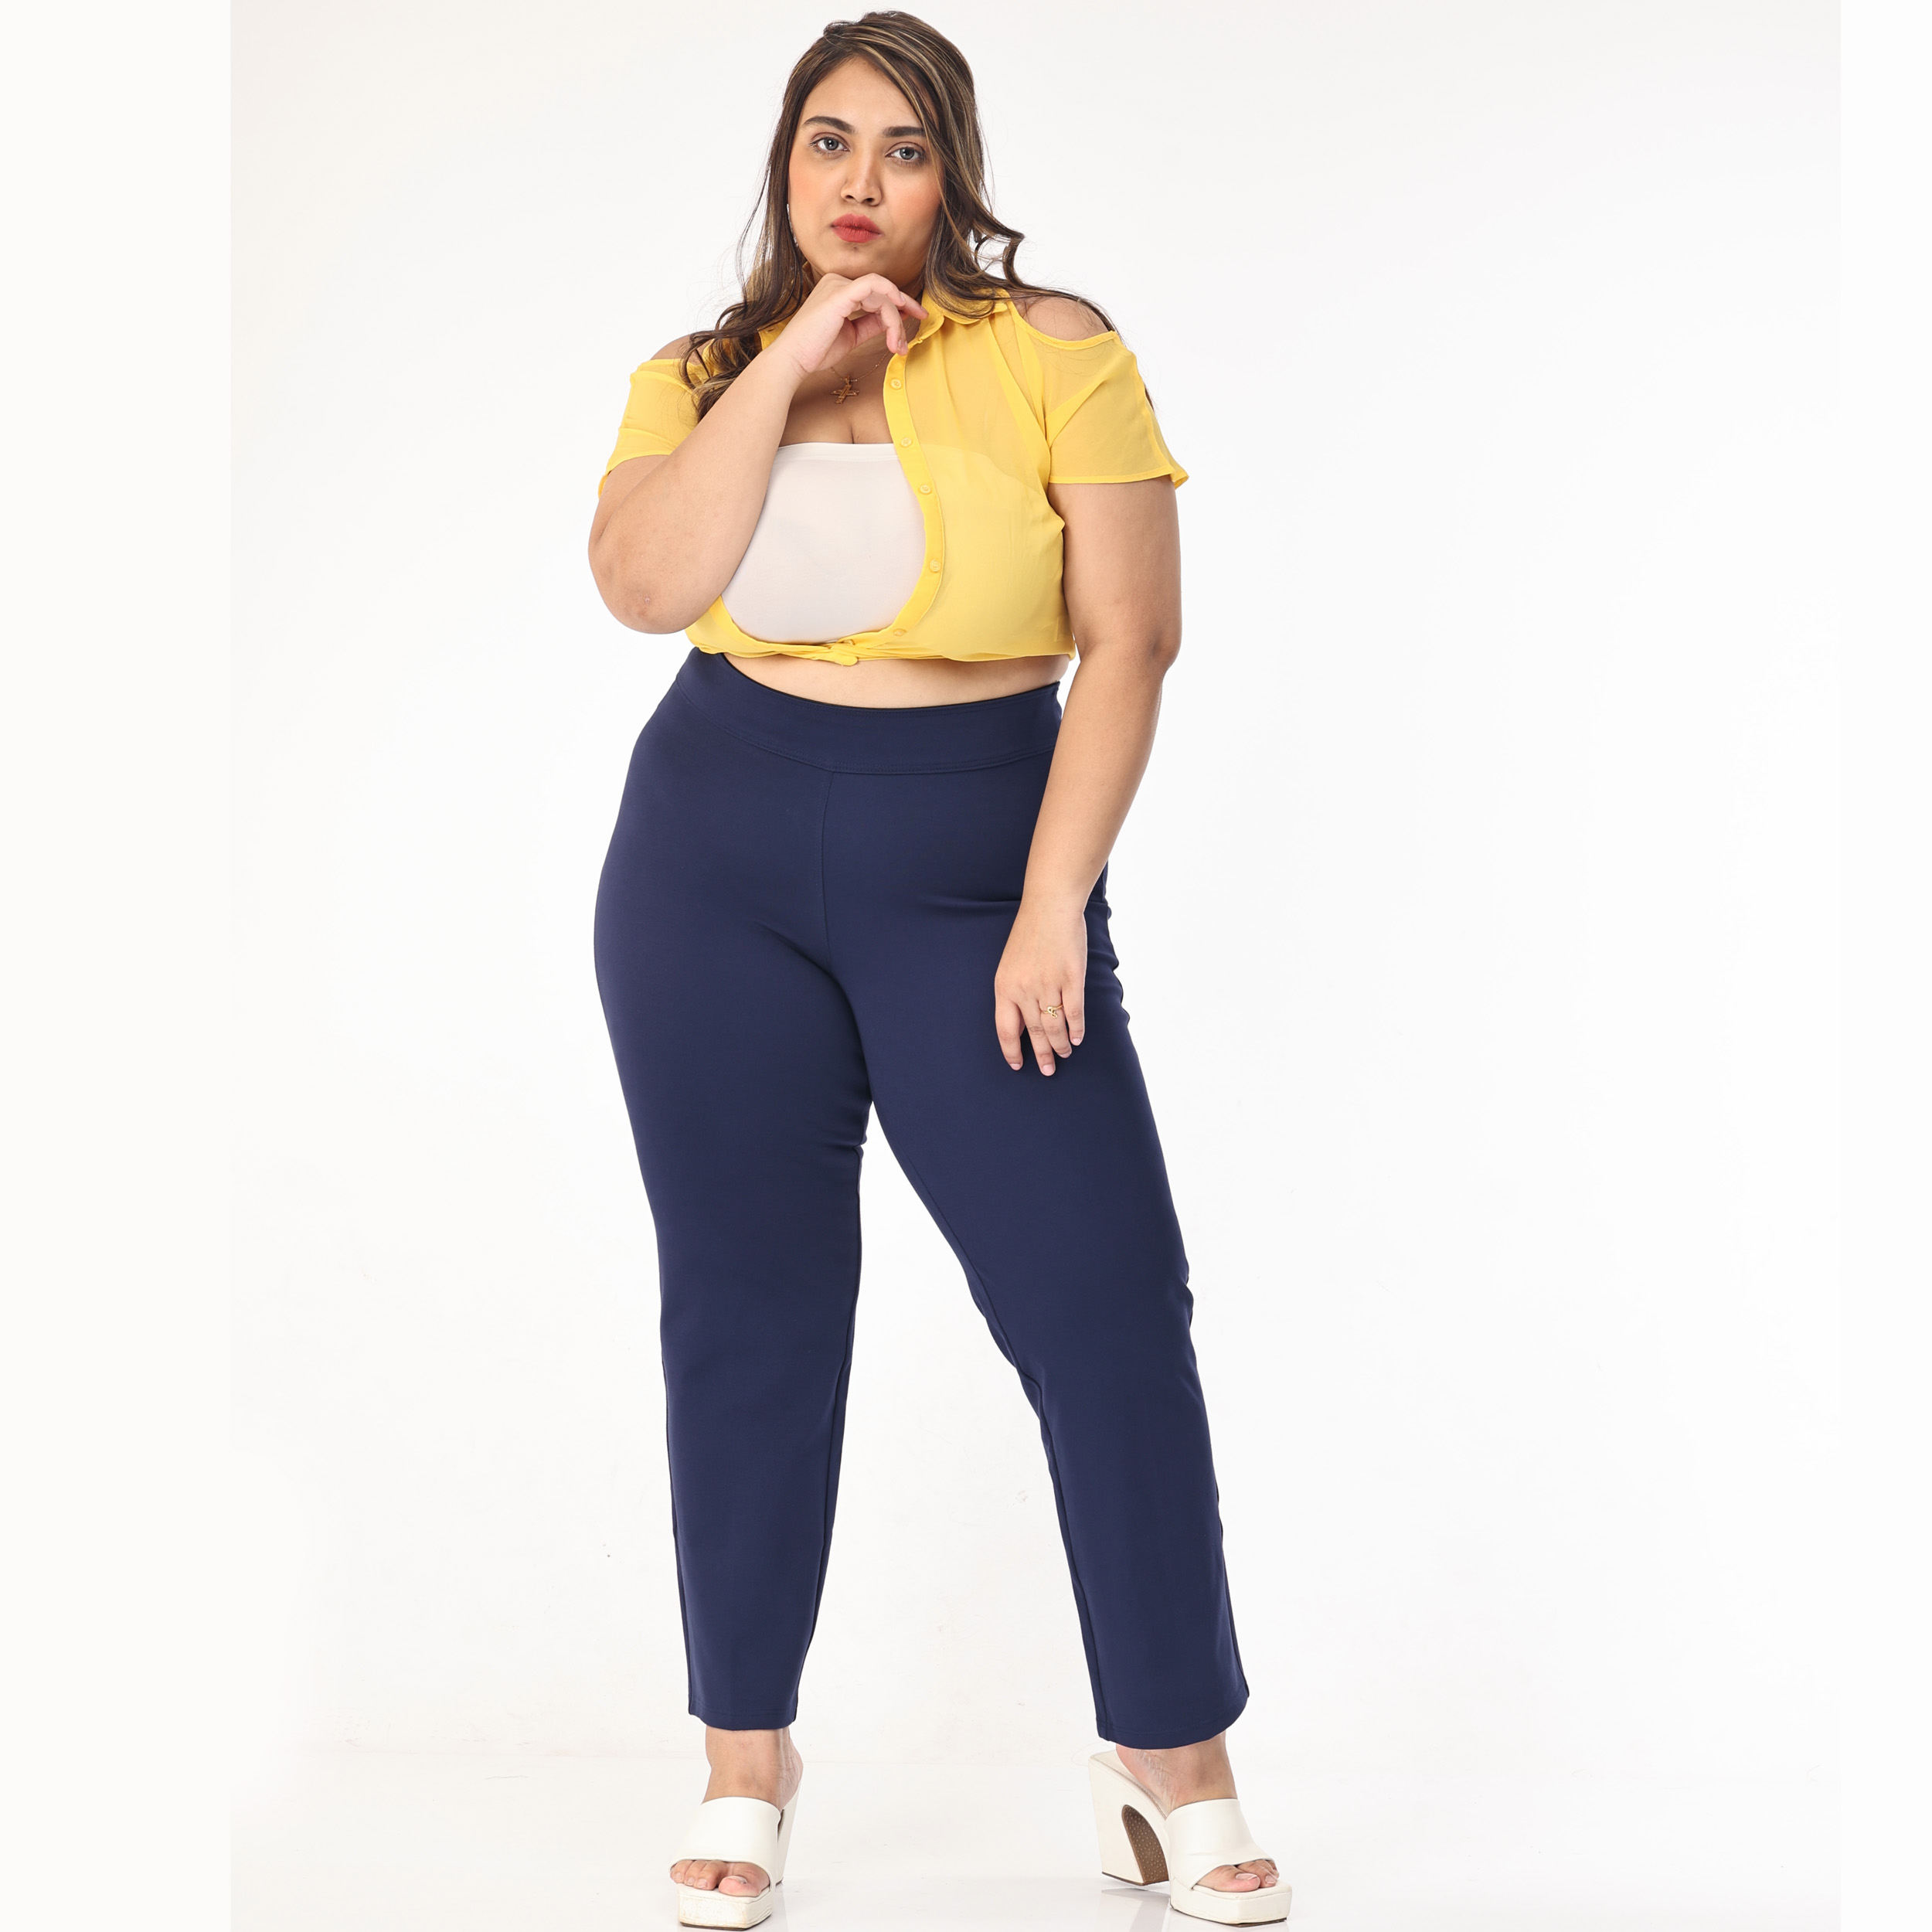 Buy Plus Size Pants Xxl online | Lazada.com.ph